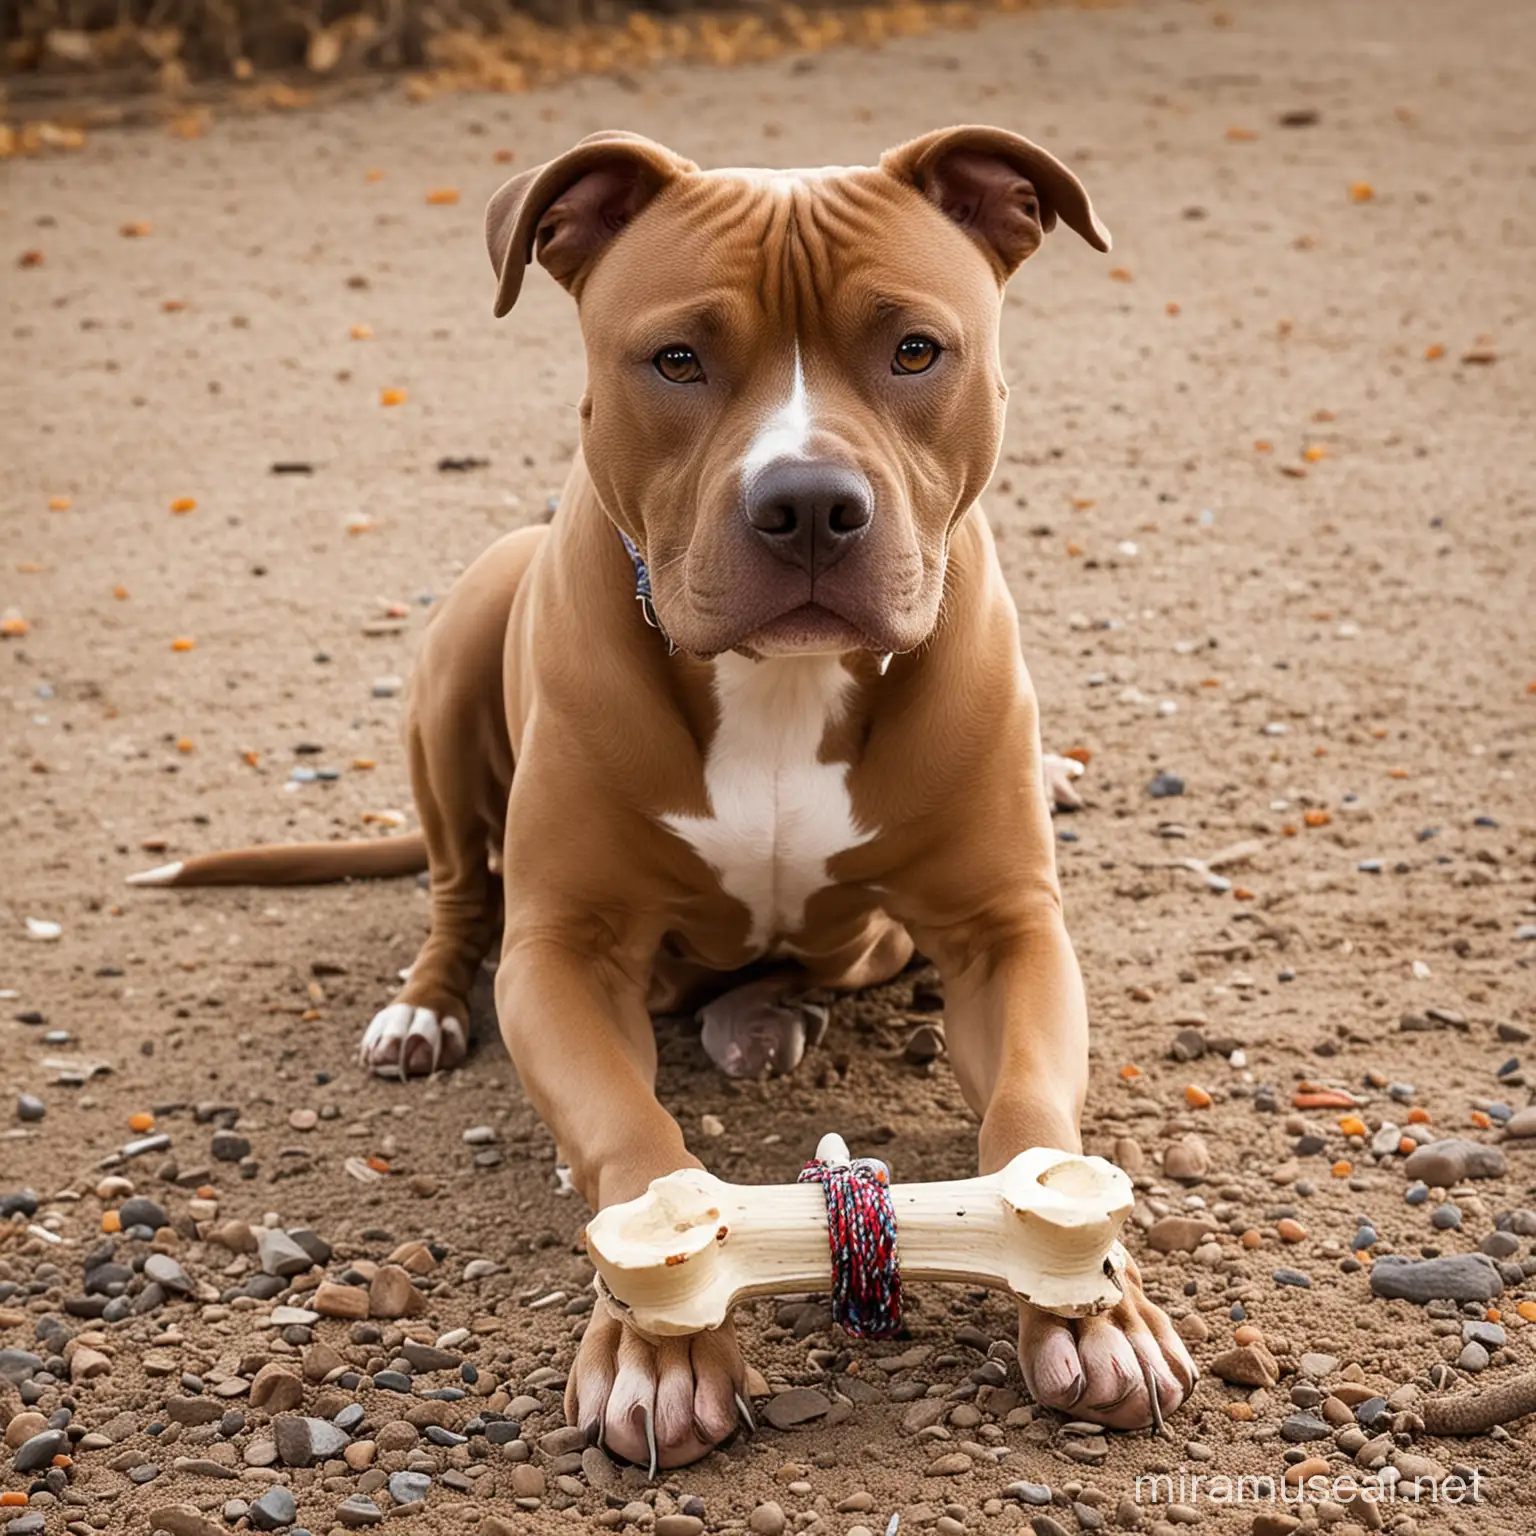 Playful Pitbull with Toy Bone